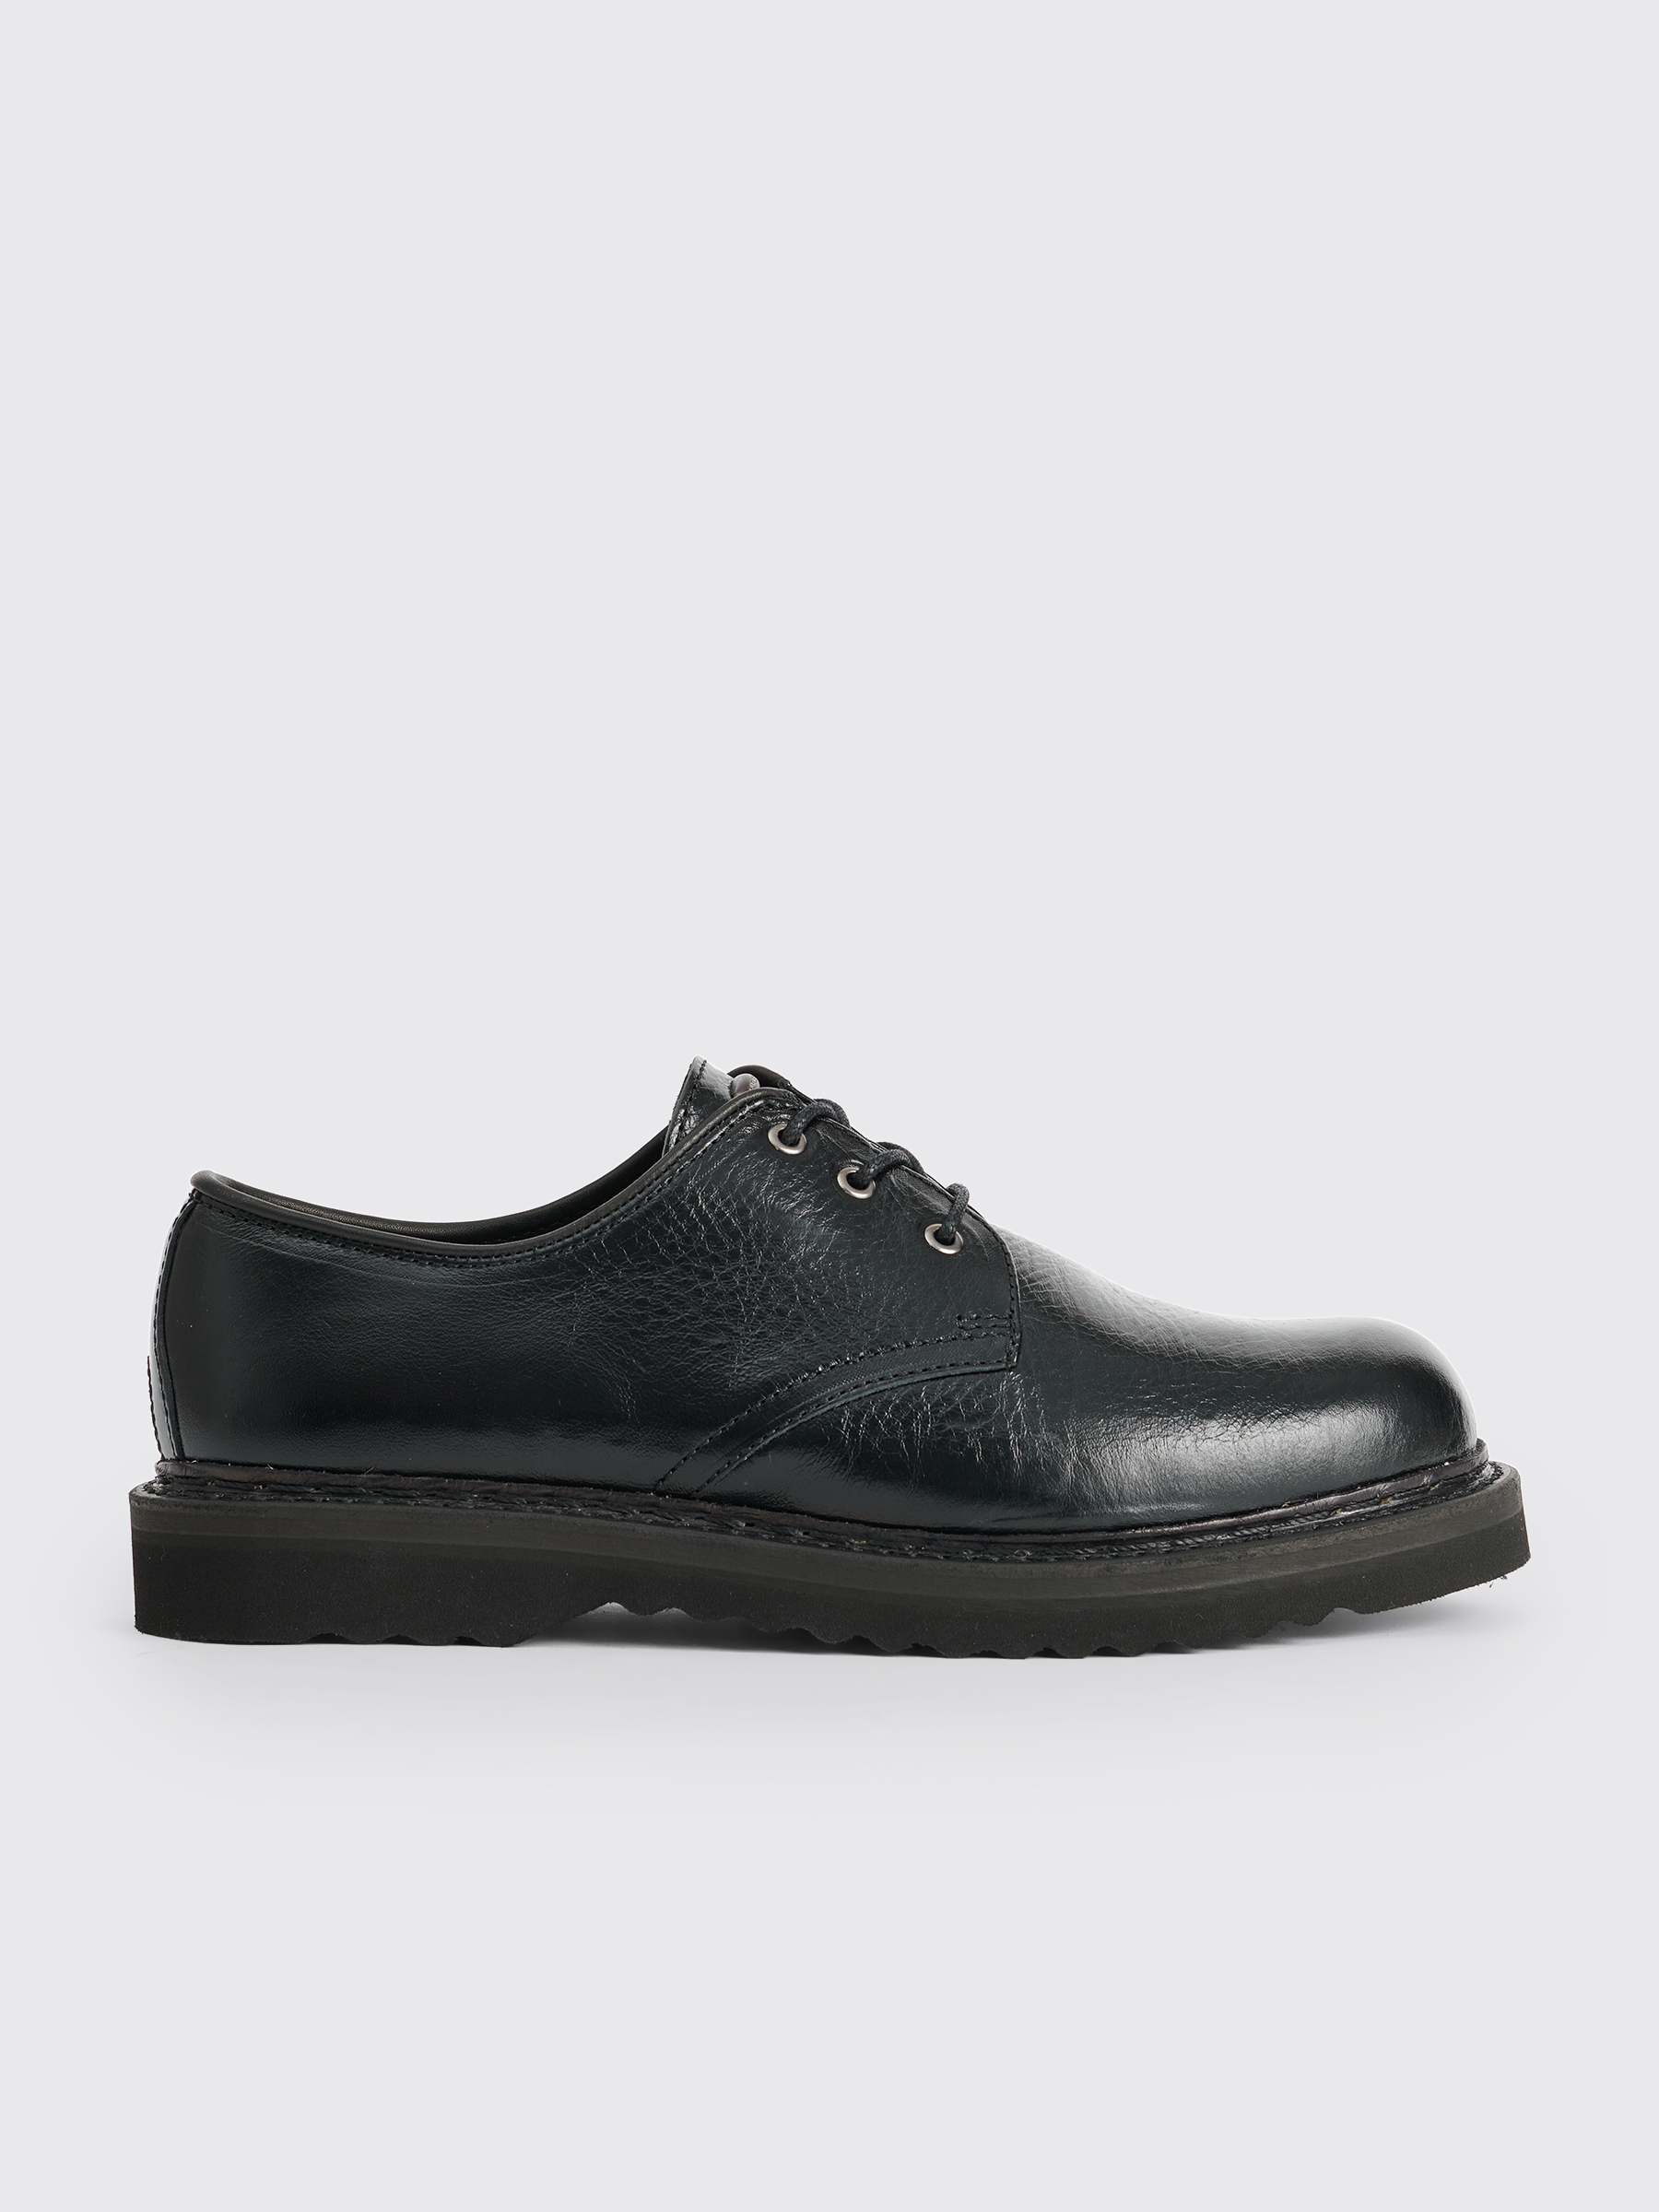 Très Bien - Our Legacy Trampler Shoes Cracked Patent Leather Black